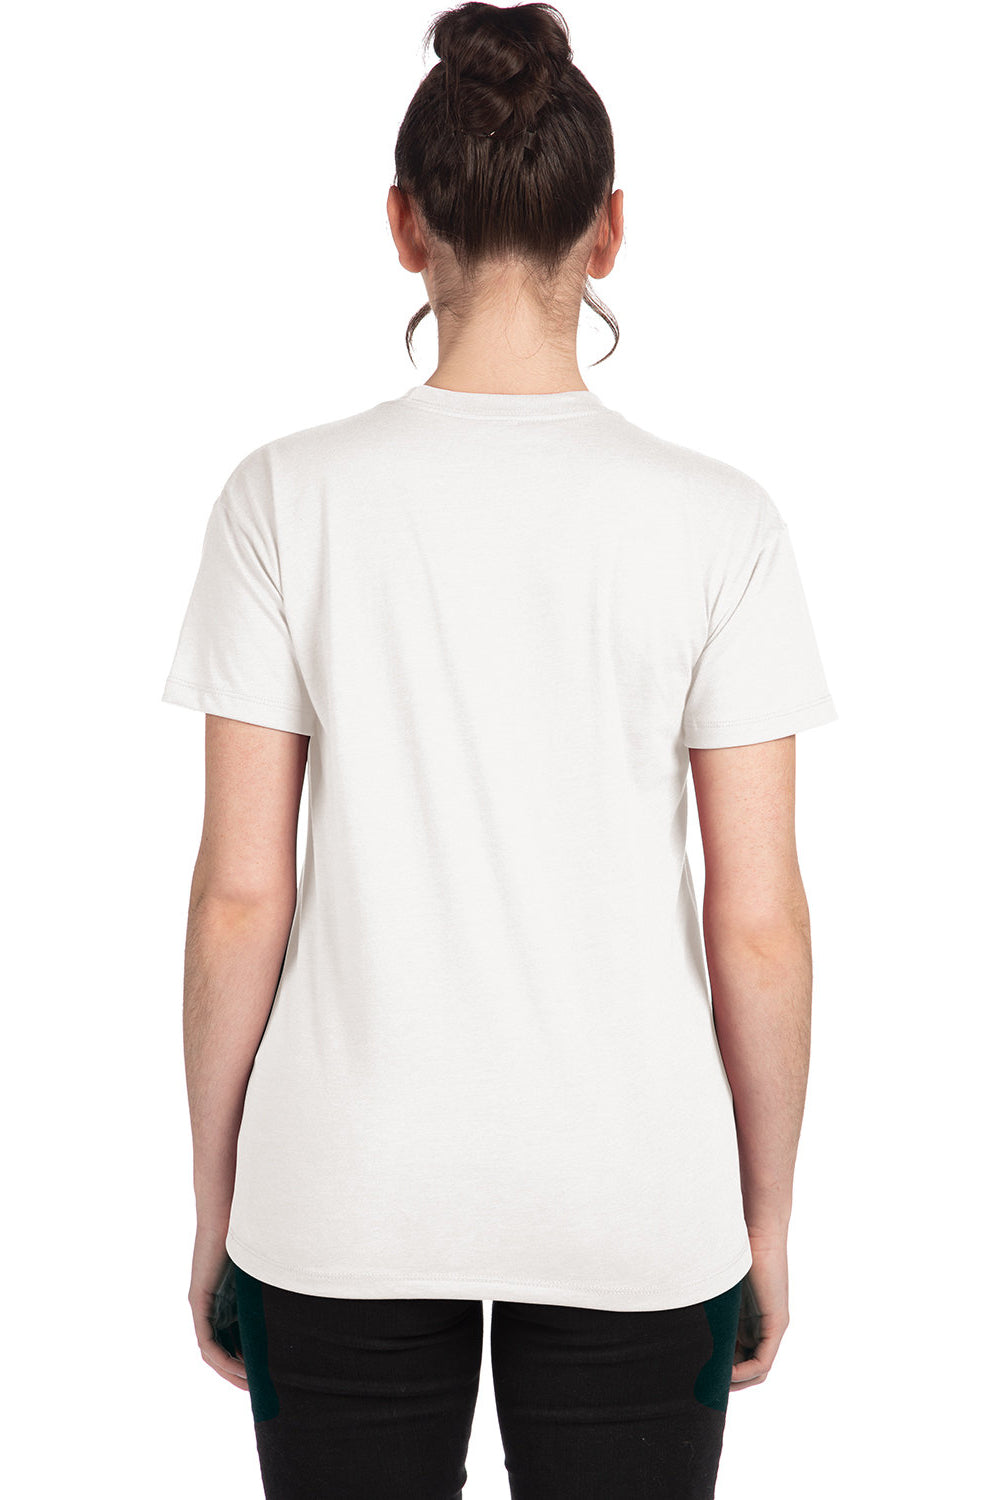 Next Level 6600 Womens Relaxed CVC Short Sleeve Crewneck T-Shirt White Back